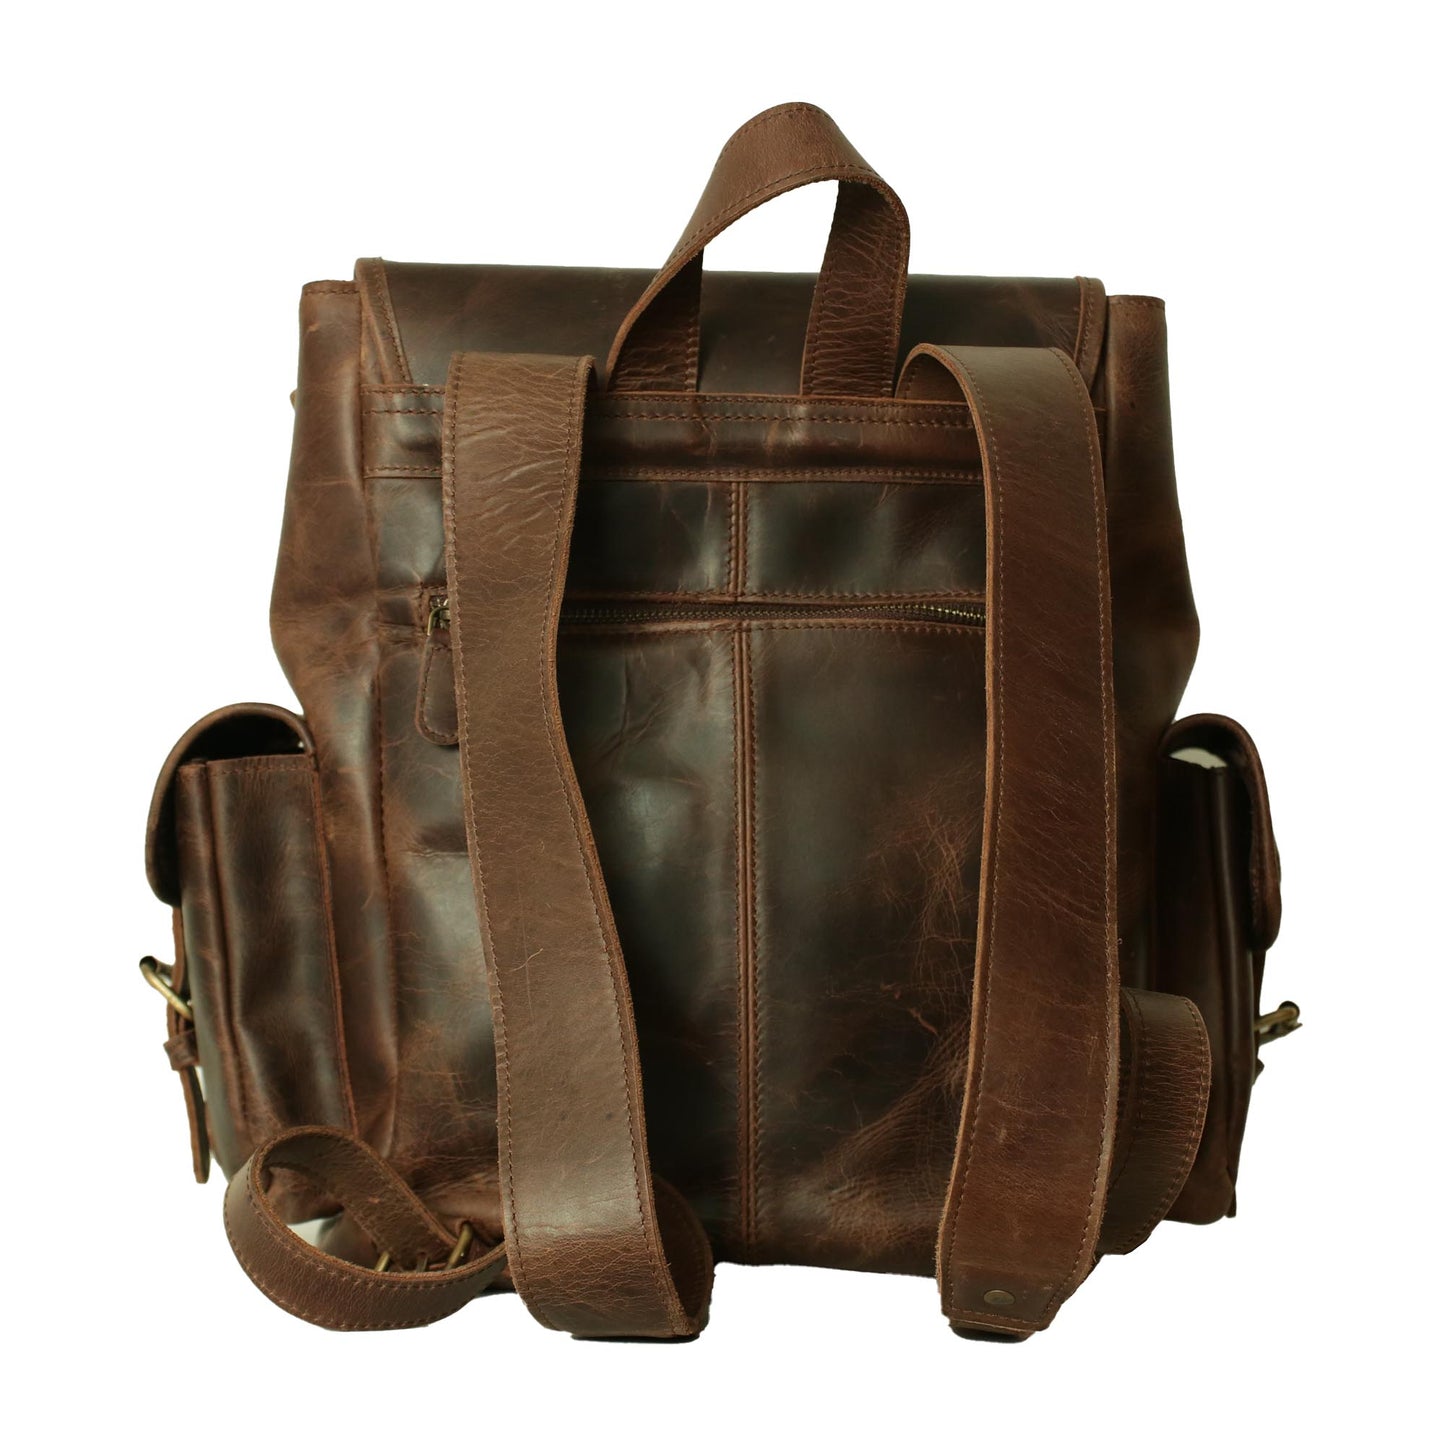 Unisex Leather Backpack for Travel, Mens Backpack, Women Backpack Leather, Traveling Leather Bag, Travel Backpack, Leather Drawstring Bag